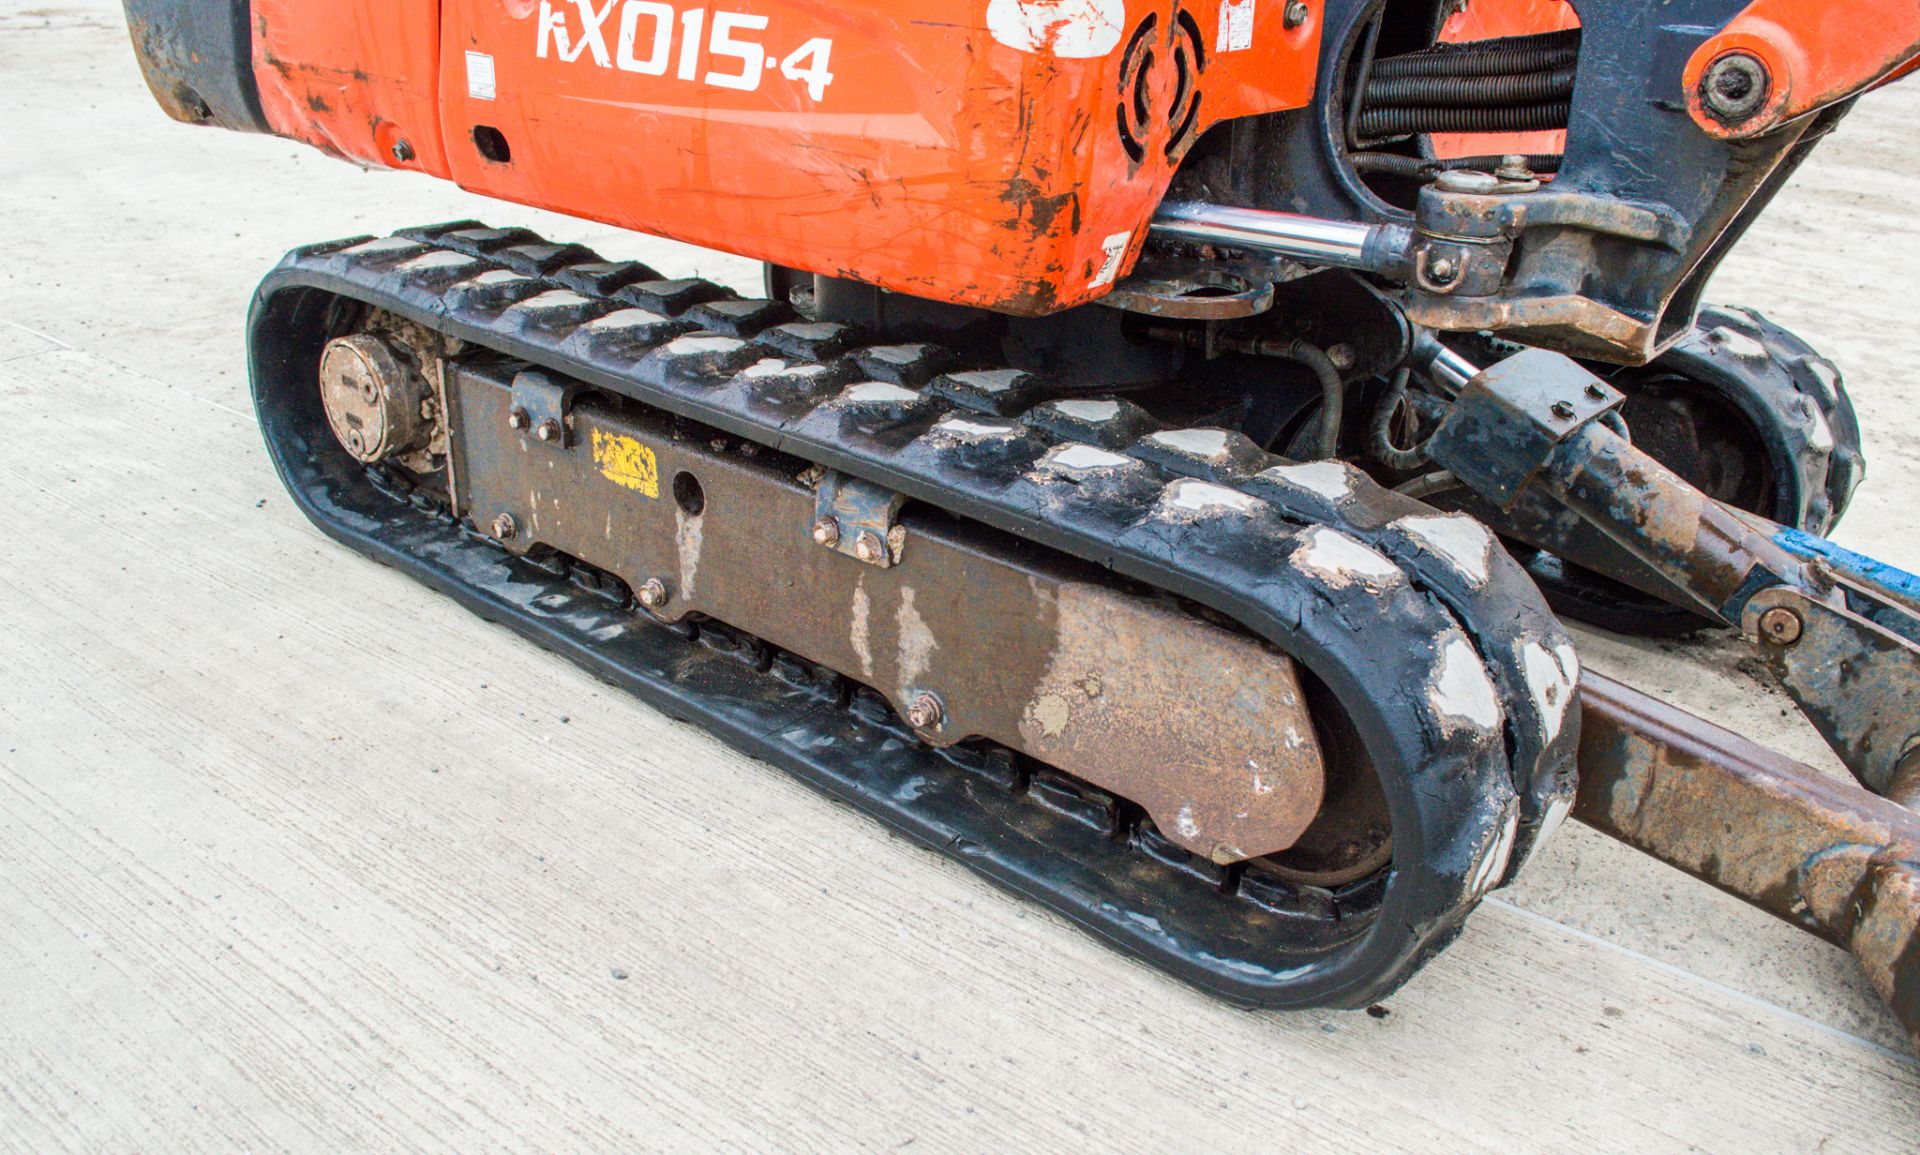 Kubota KX015-4 1.5 tonne rubber tracked mini excavator Year: 2015 S/N: 58351 Recorded Hour: 2561 - Image 10 of 21